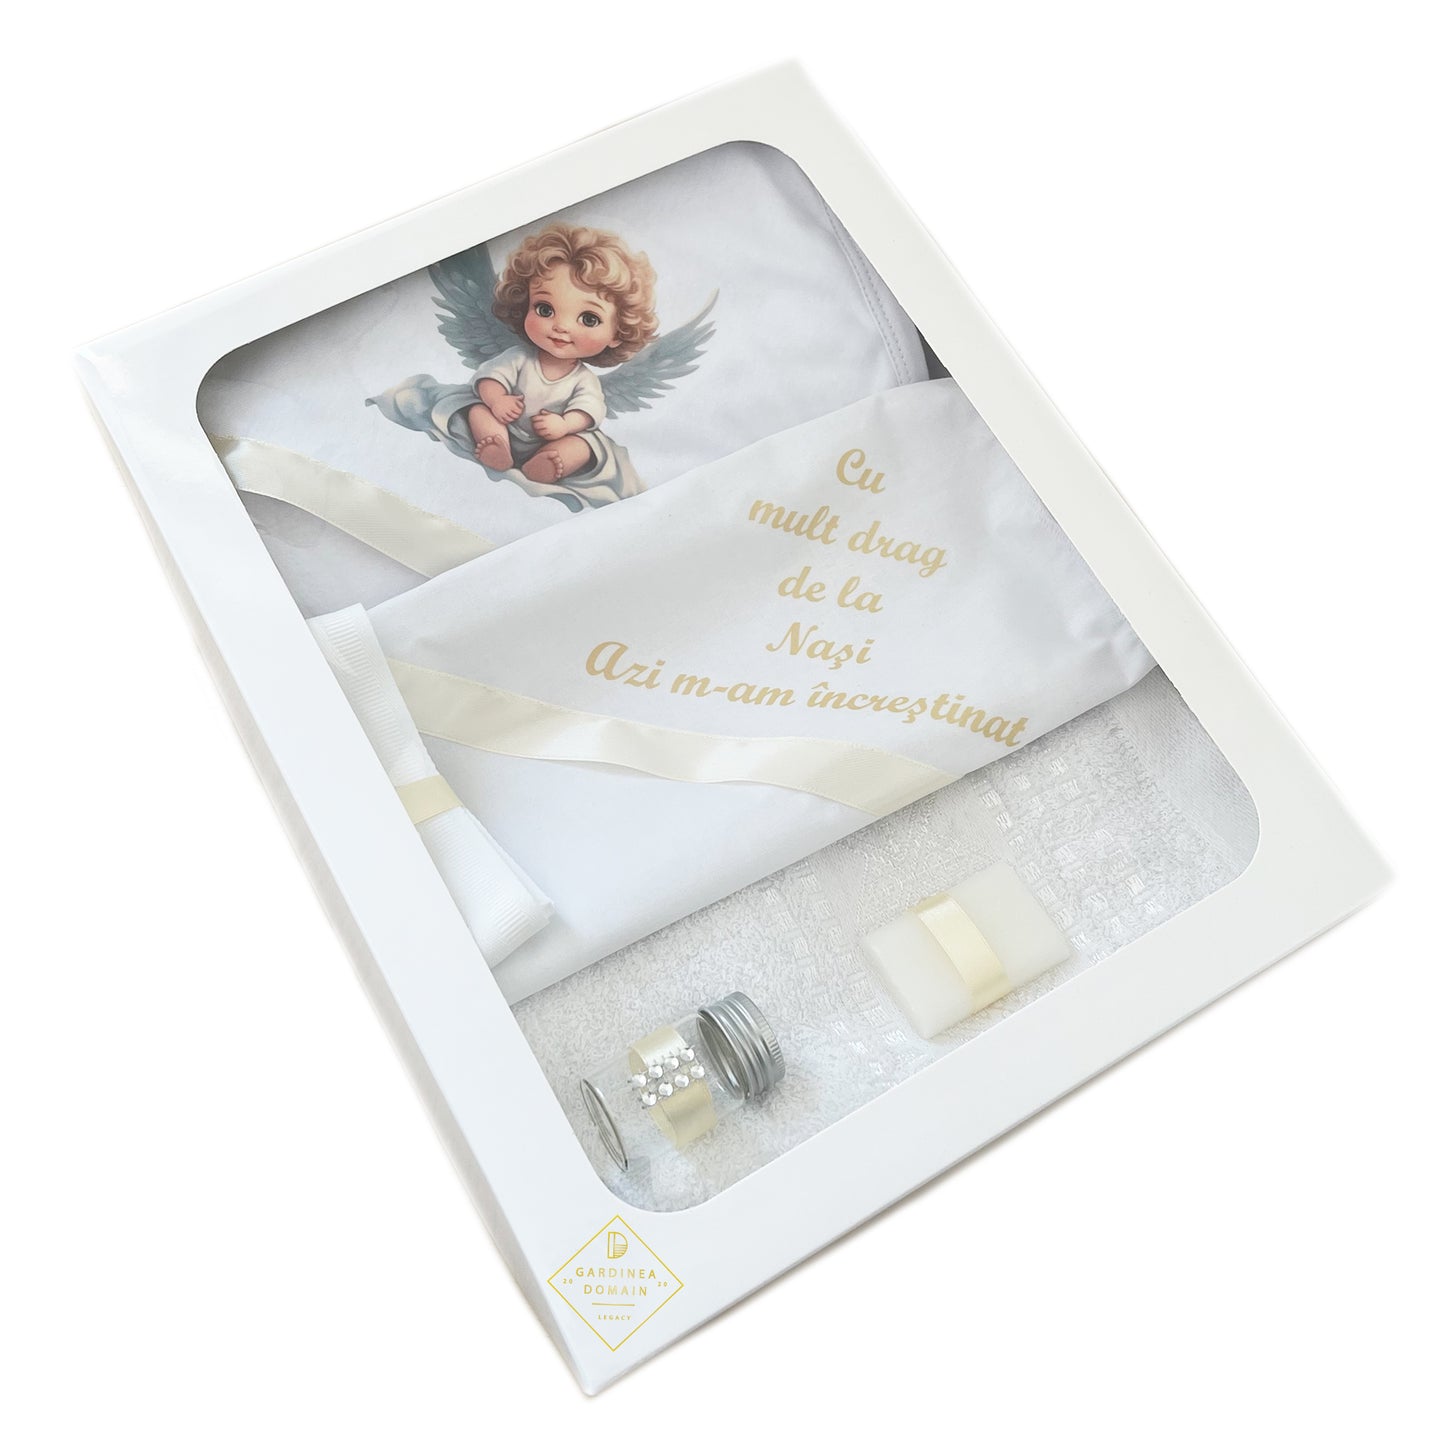 Trusou ingeras realist botez Gardinea Domain® 6 piese, in cutie cadou, bumbac 100%, personalizat cu mesajul "Cu drag de la nasi!", alb perlat